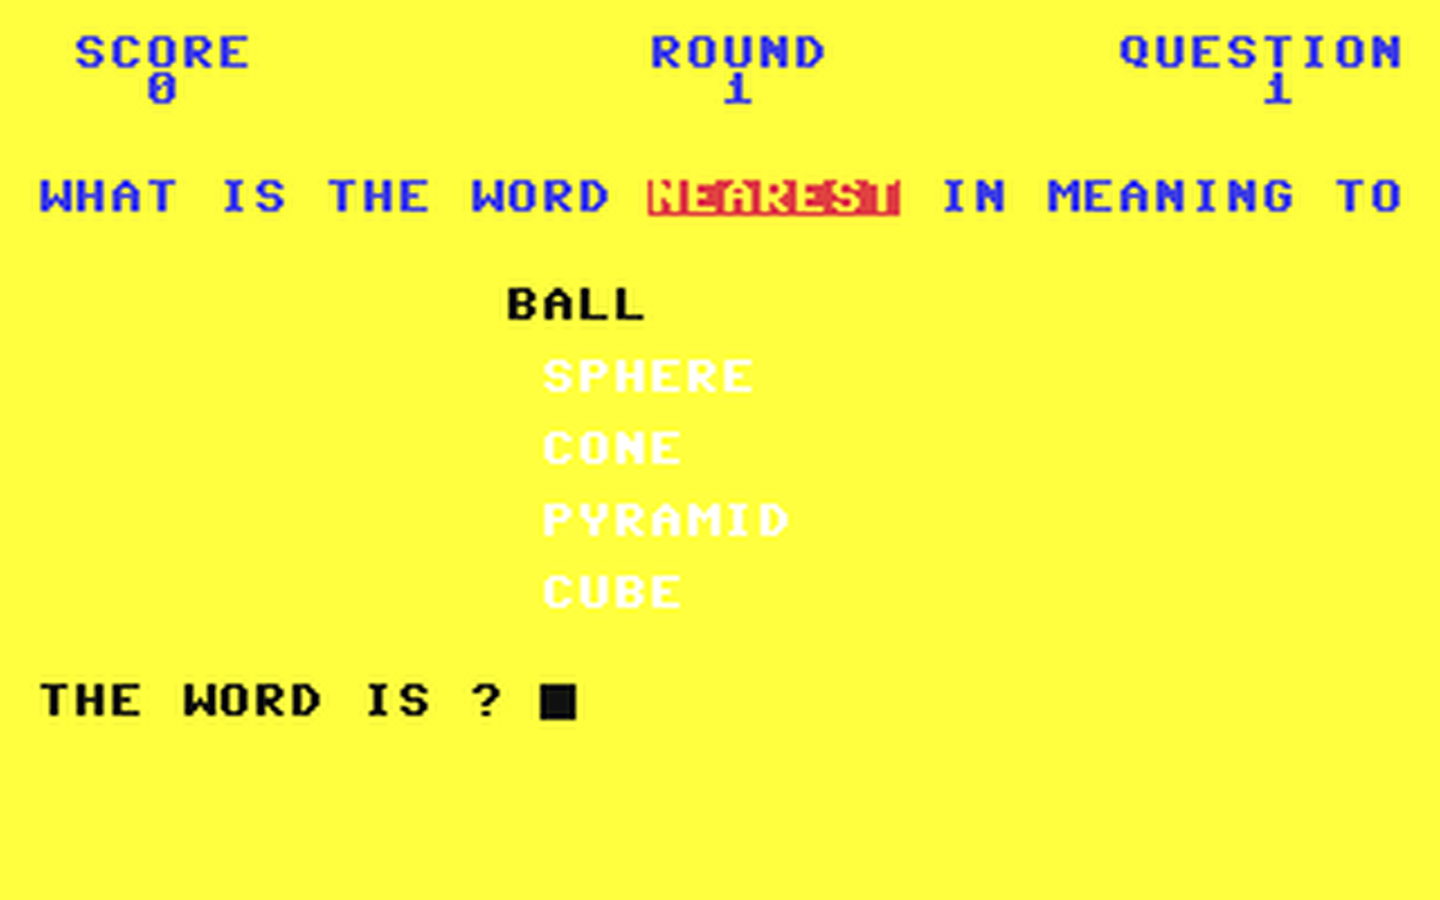 C64 GameBase Wordwise Argus_Specialist_Publications_Ltd./Home_Computing_Weekly 1984